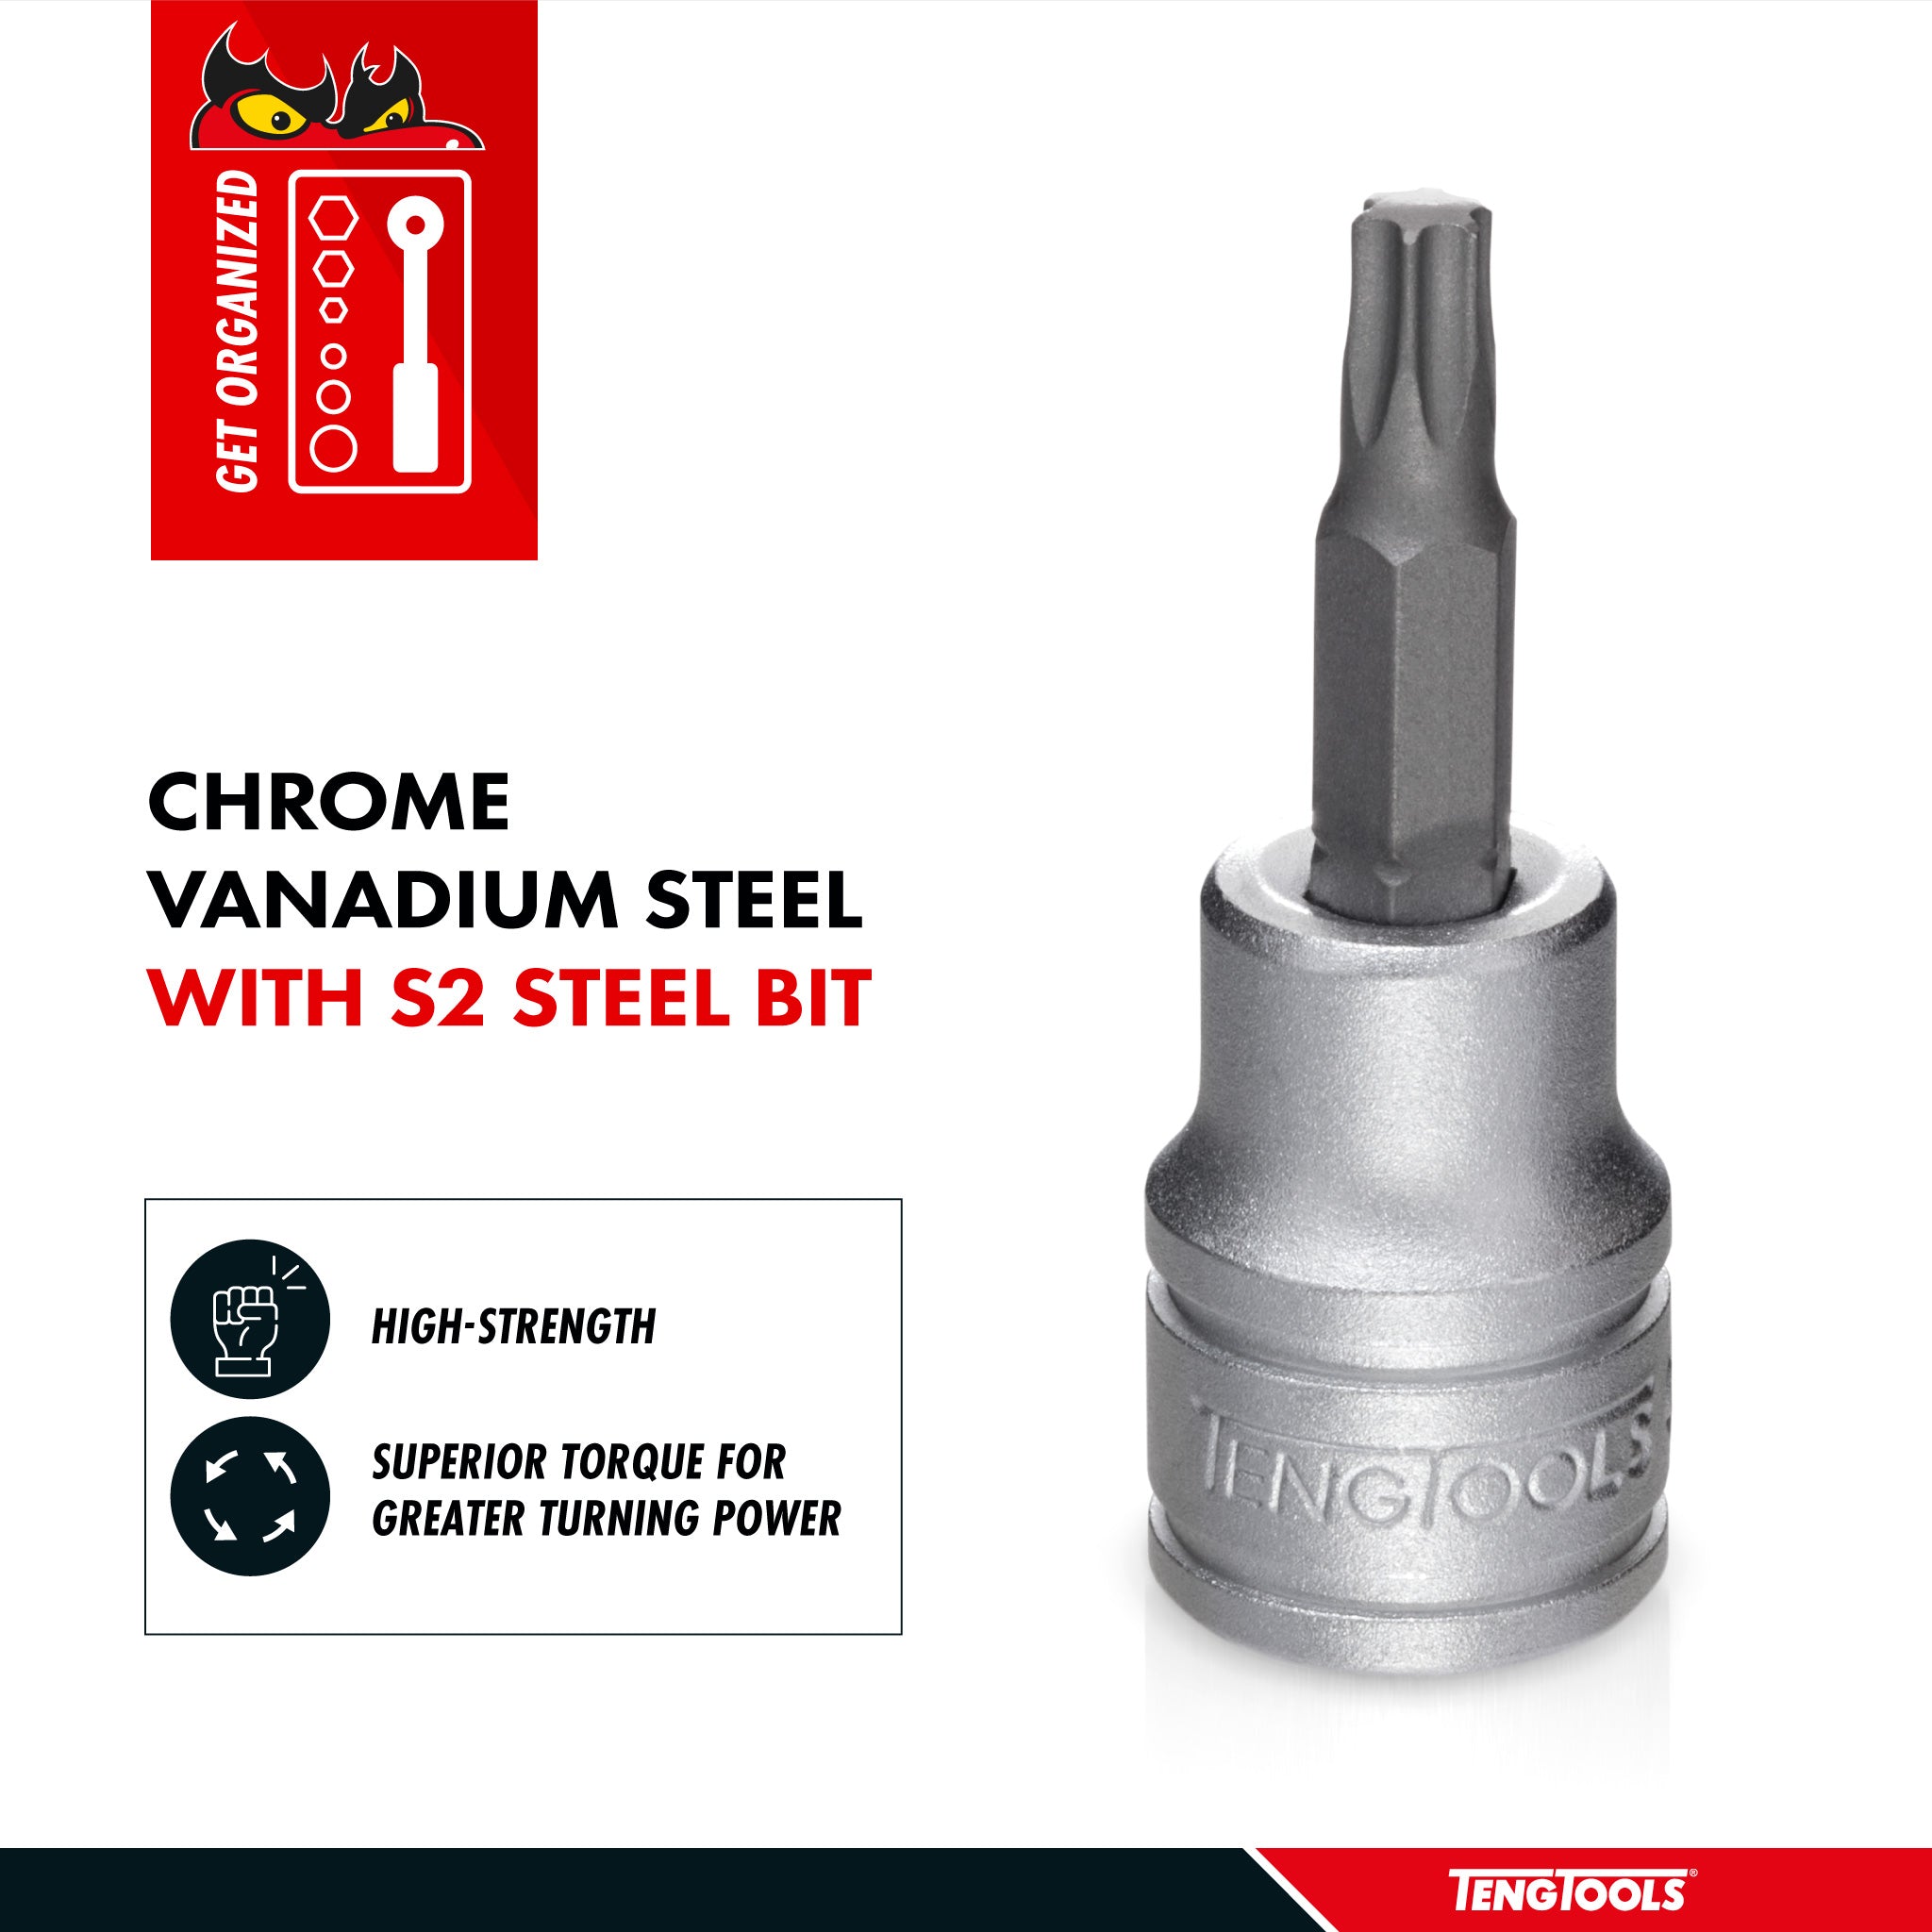 Teng Tools 3/8 Inch Drive Metric Torx TX Chrome Vanadium Sockets - TX27